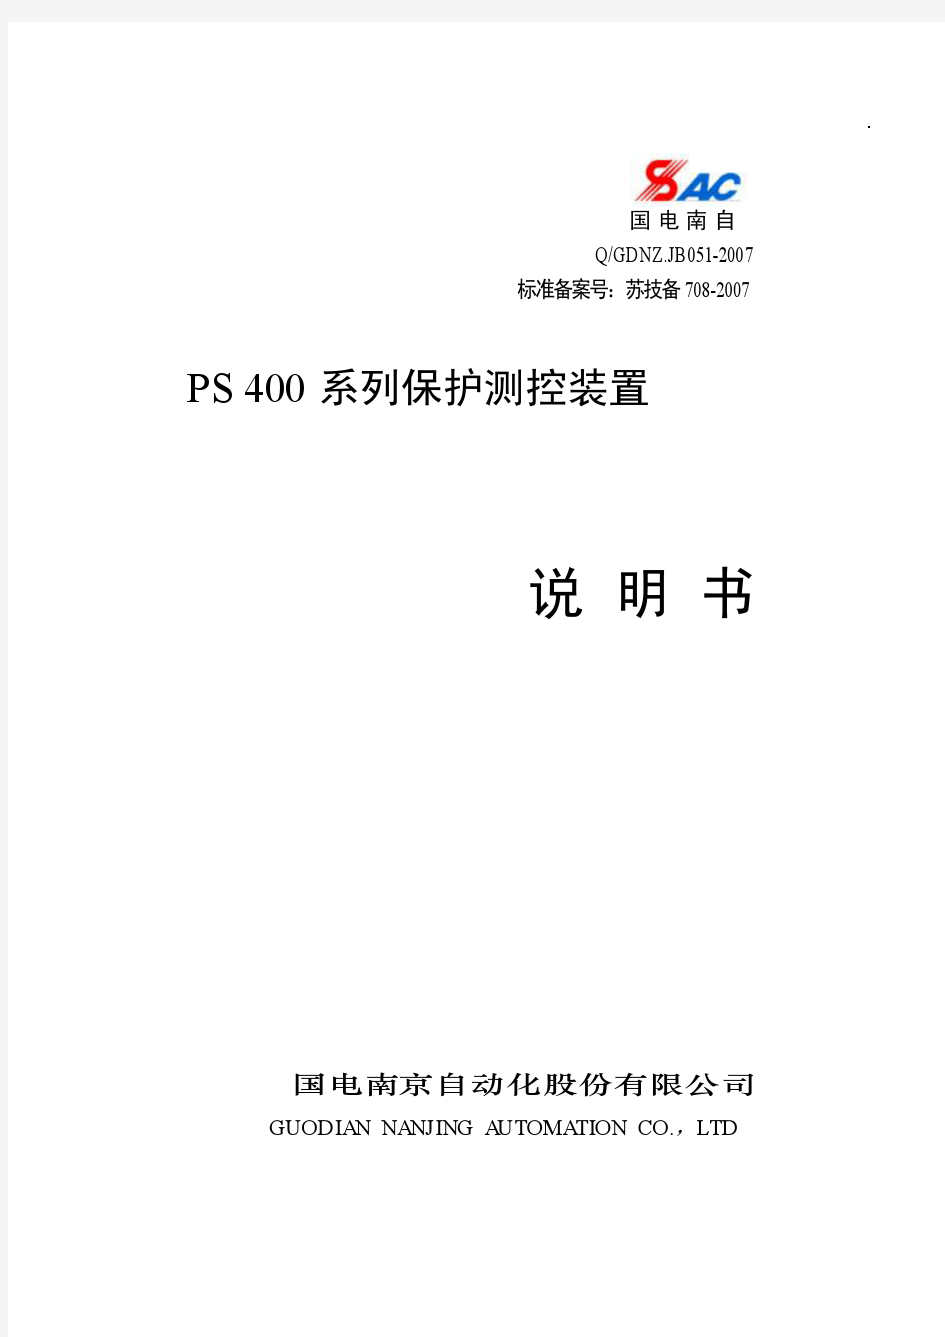 PS400系列保护测控装置说明书(V1.4)